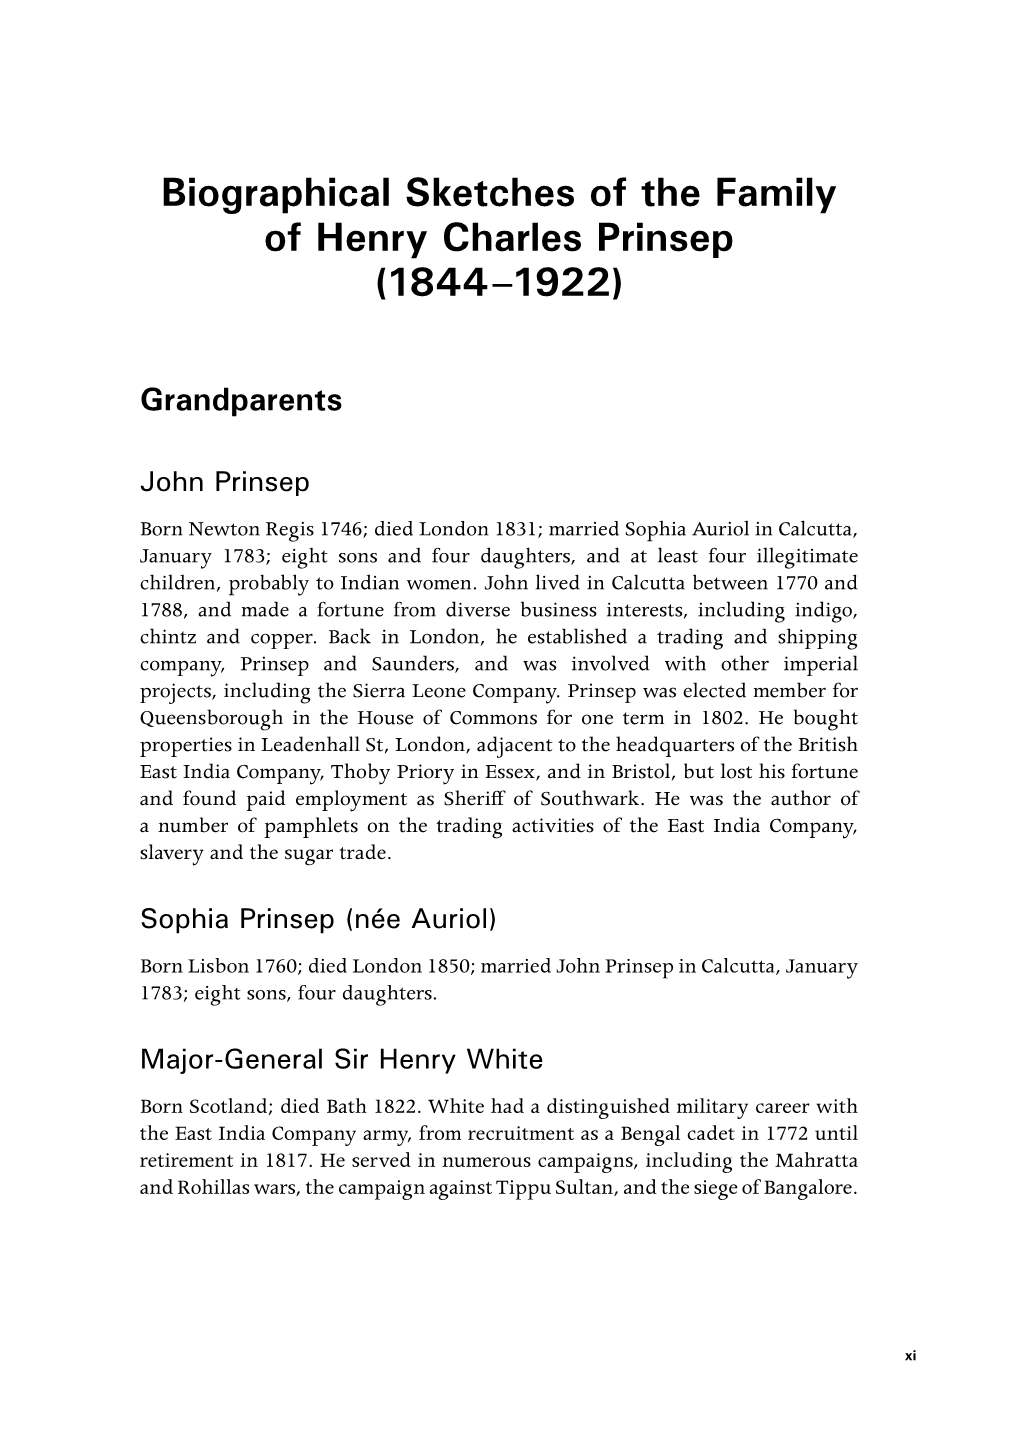 Henry Prinsep's Empire Parents